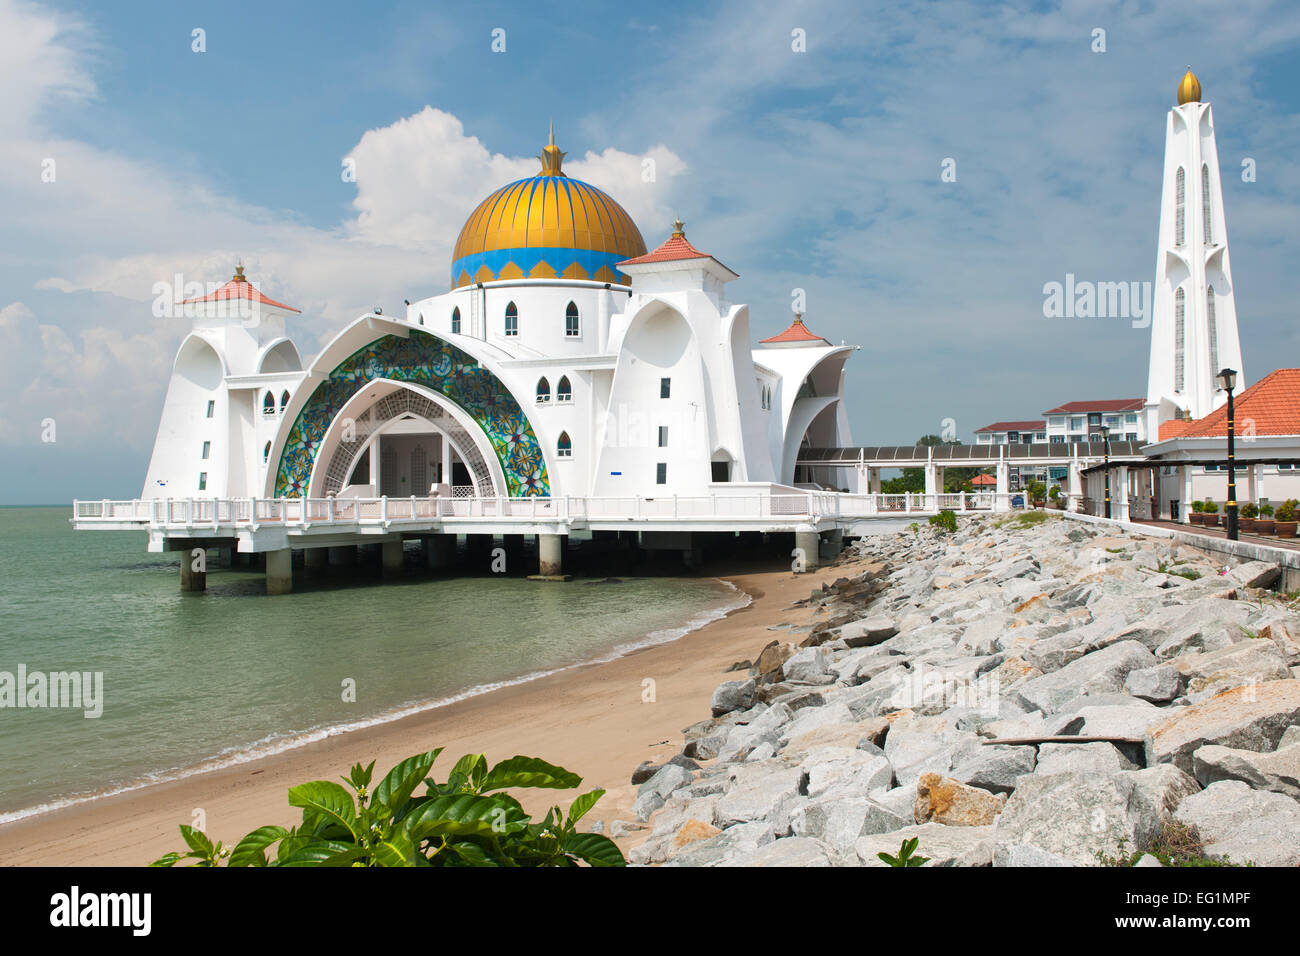 Die Malacca Straits Moschee (aka Masjid Selat Melaka) in Malacca, Malaysia. Stockfoto